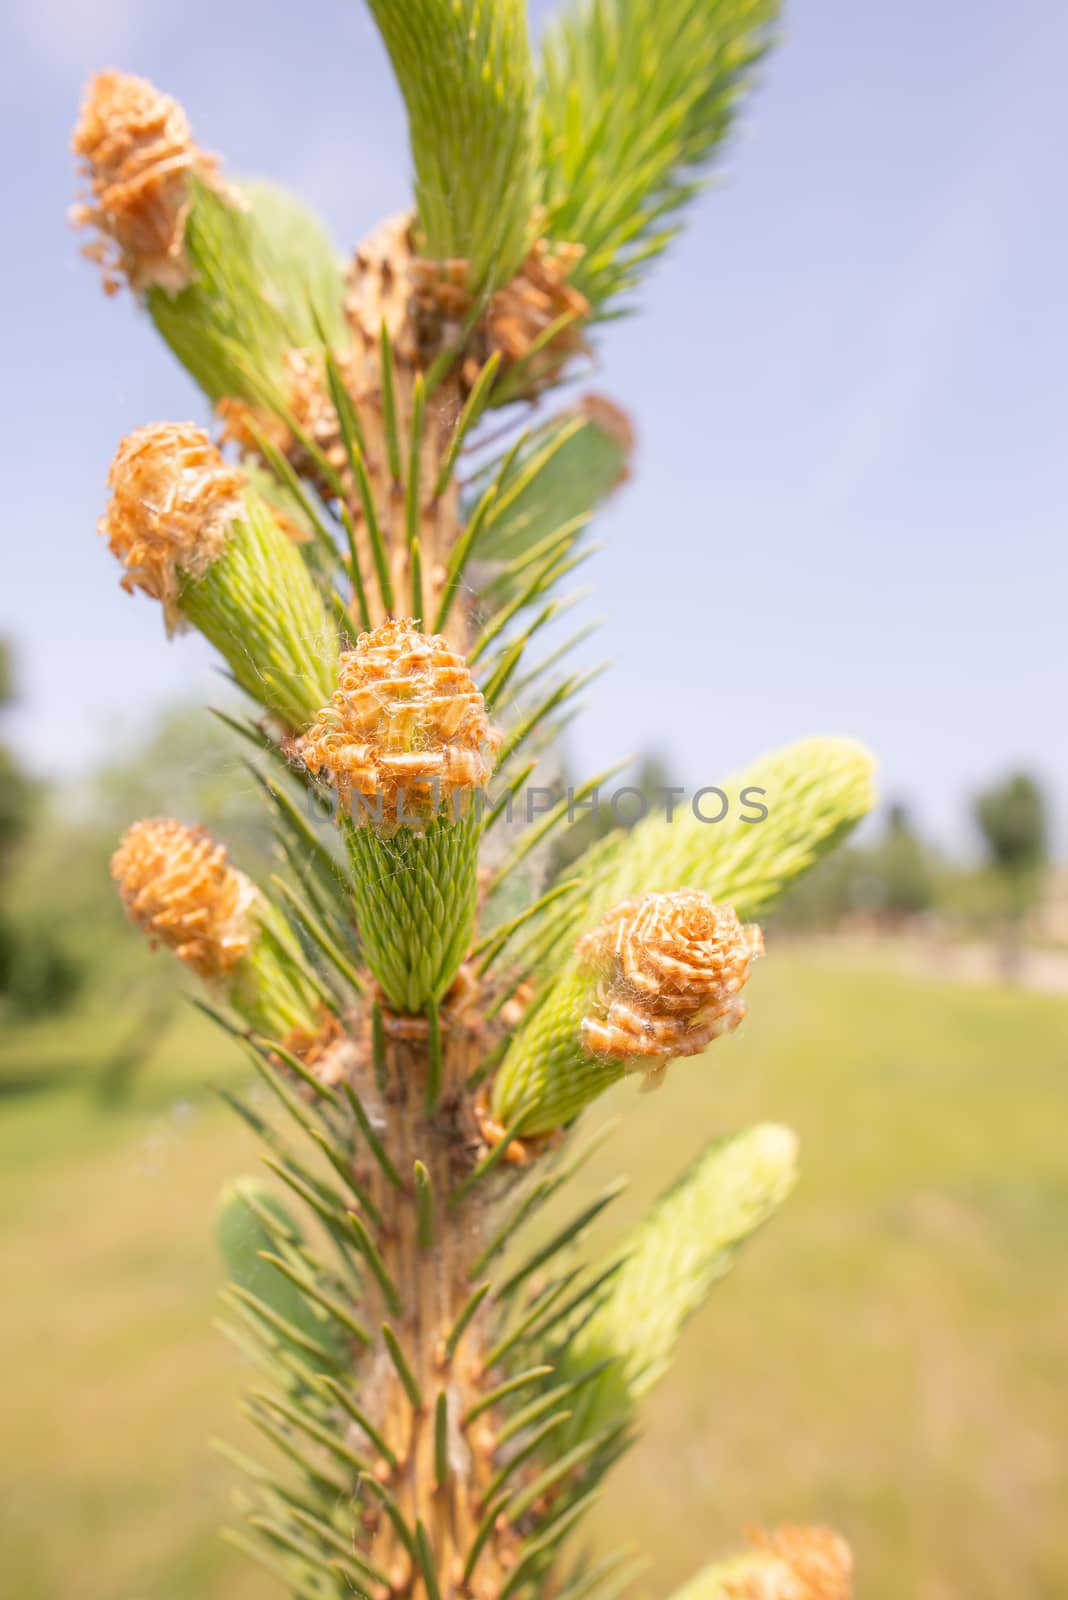 Pinus Silvestris, pine tree, flower under the warm sun during the spring season. (Selective focus)